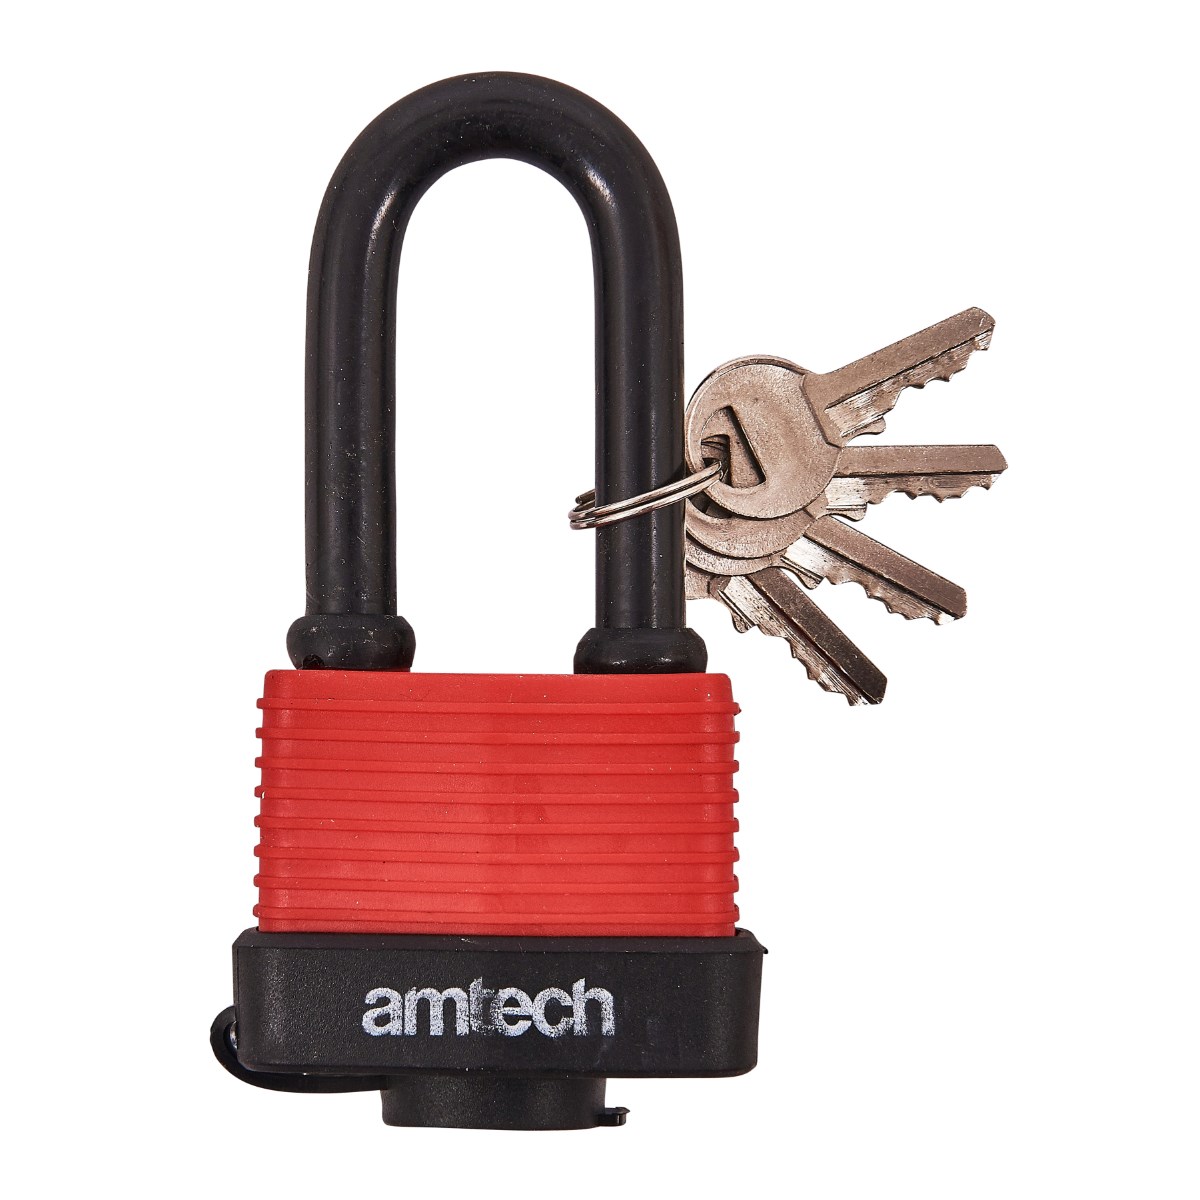 50mm long shackle weatherproof padlock Amtech